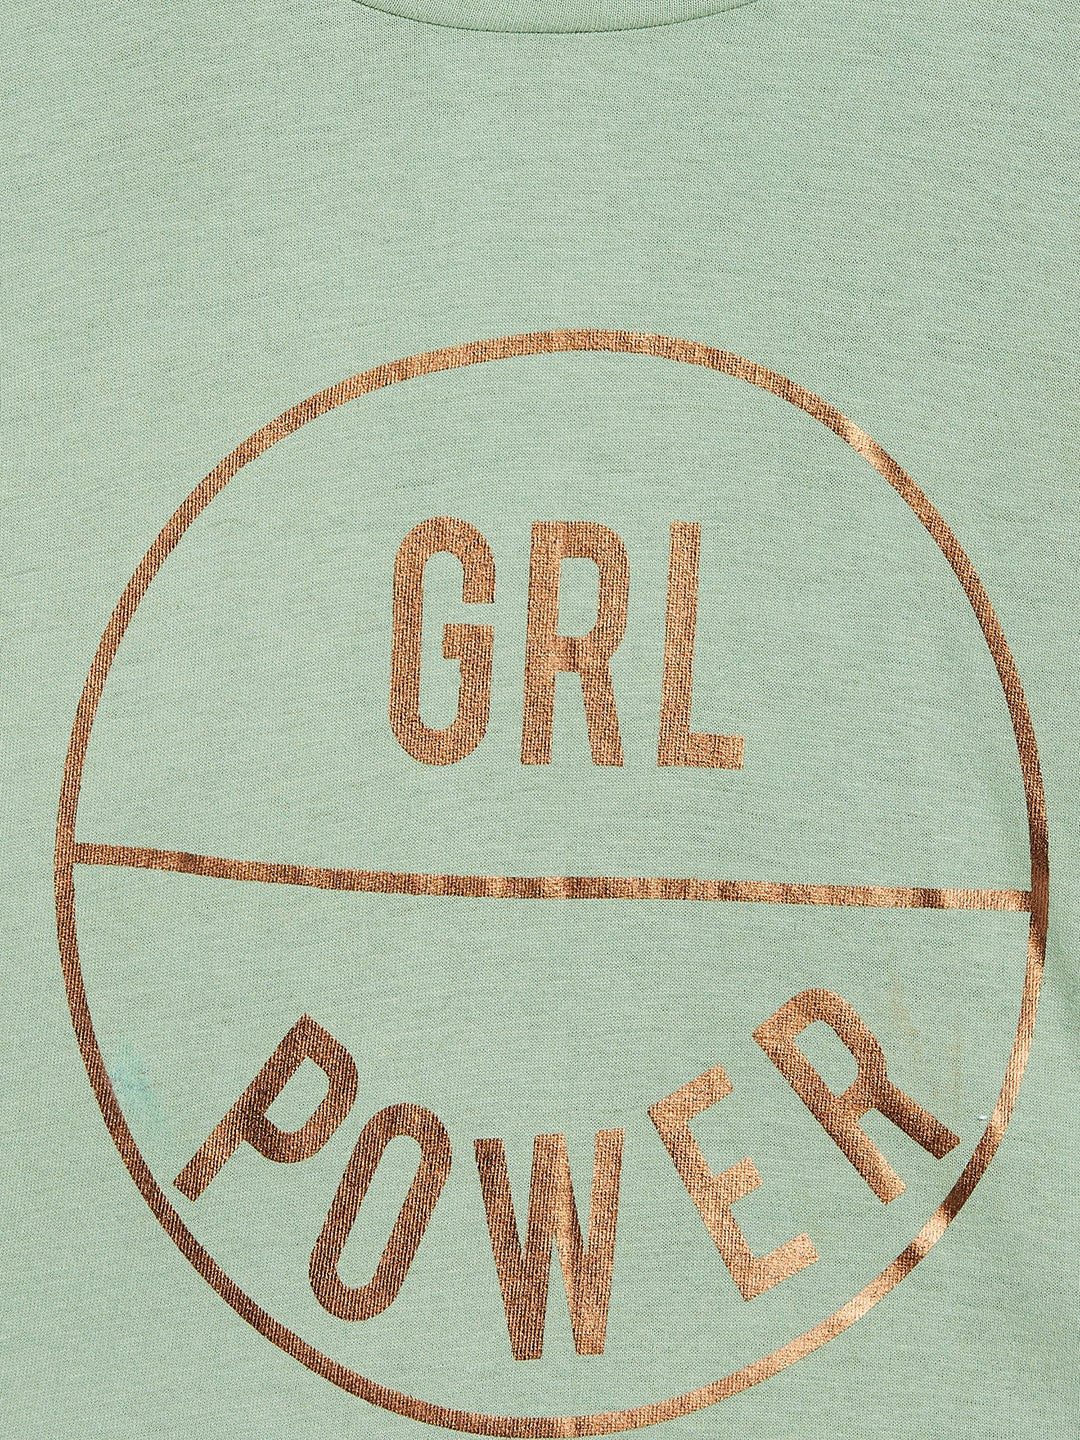 Girls Olive Girl Power Print Crop T-Shirt